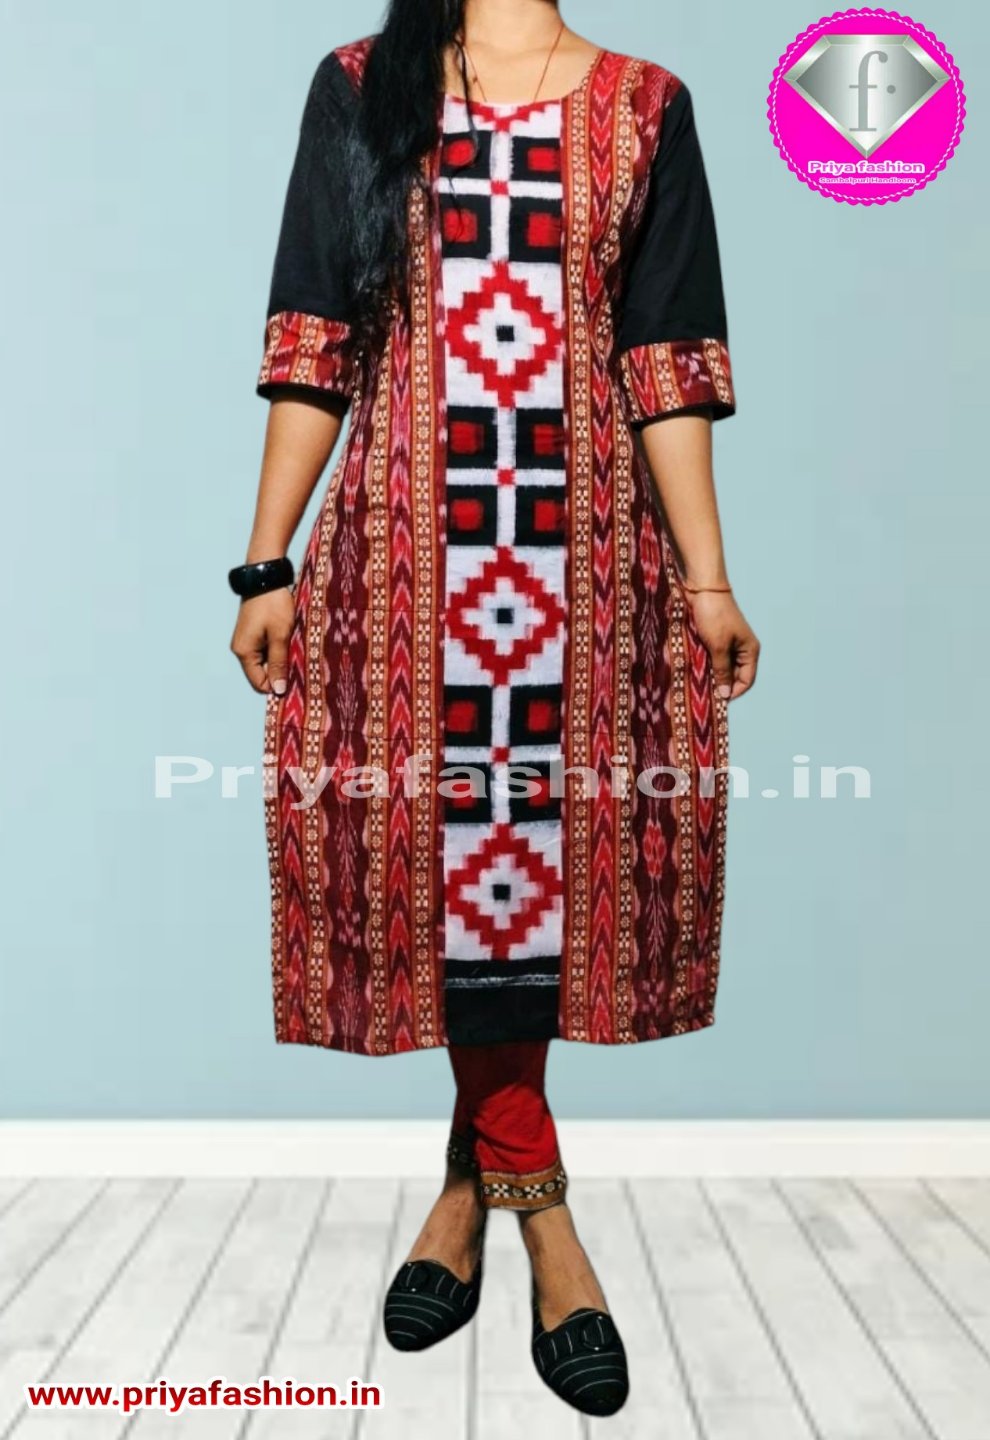 Sambalpuri designer dress in red , black ,white and orange color.